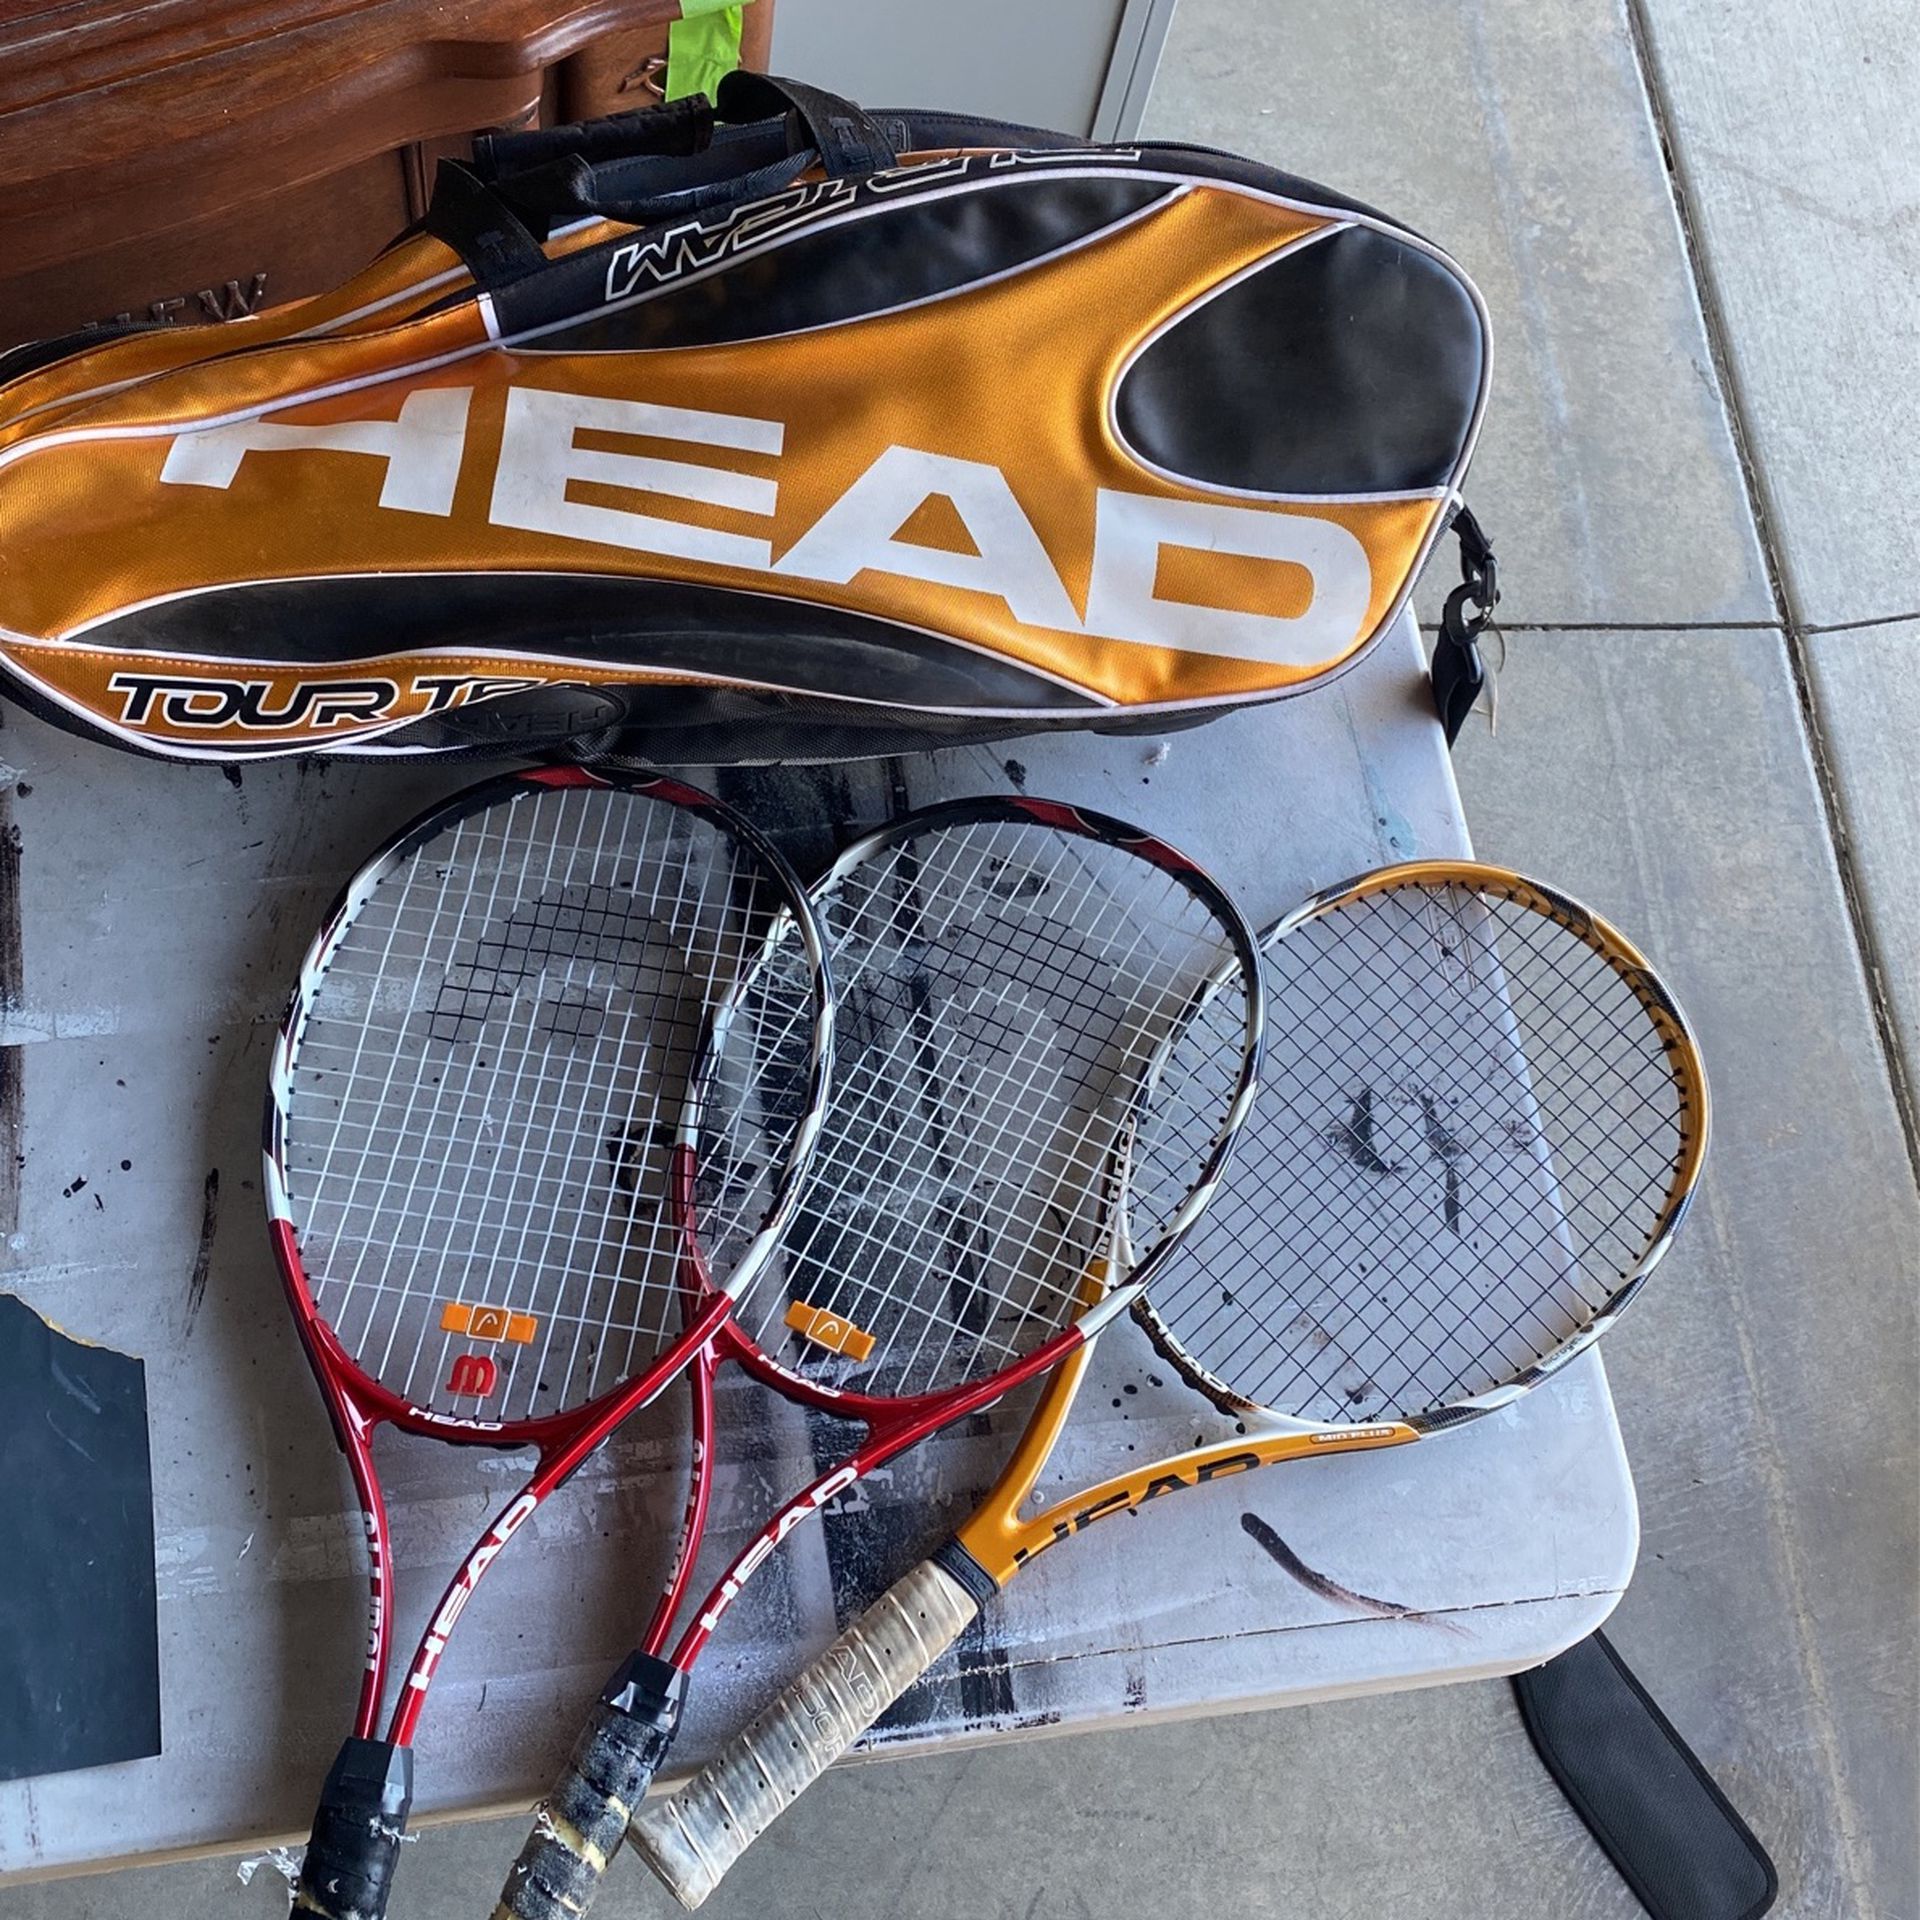 3 Head Tennis Rackets And Bag